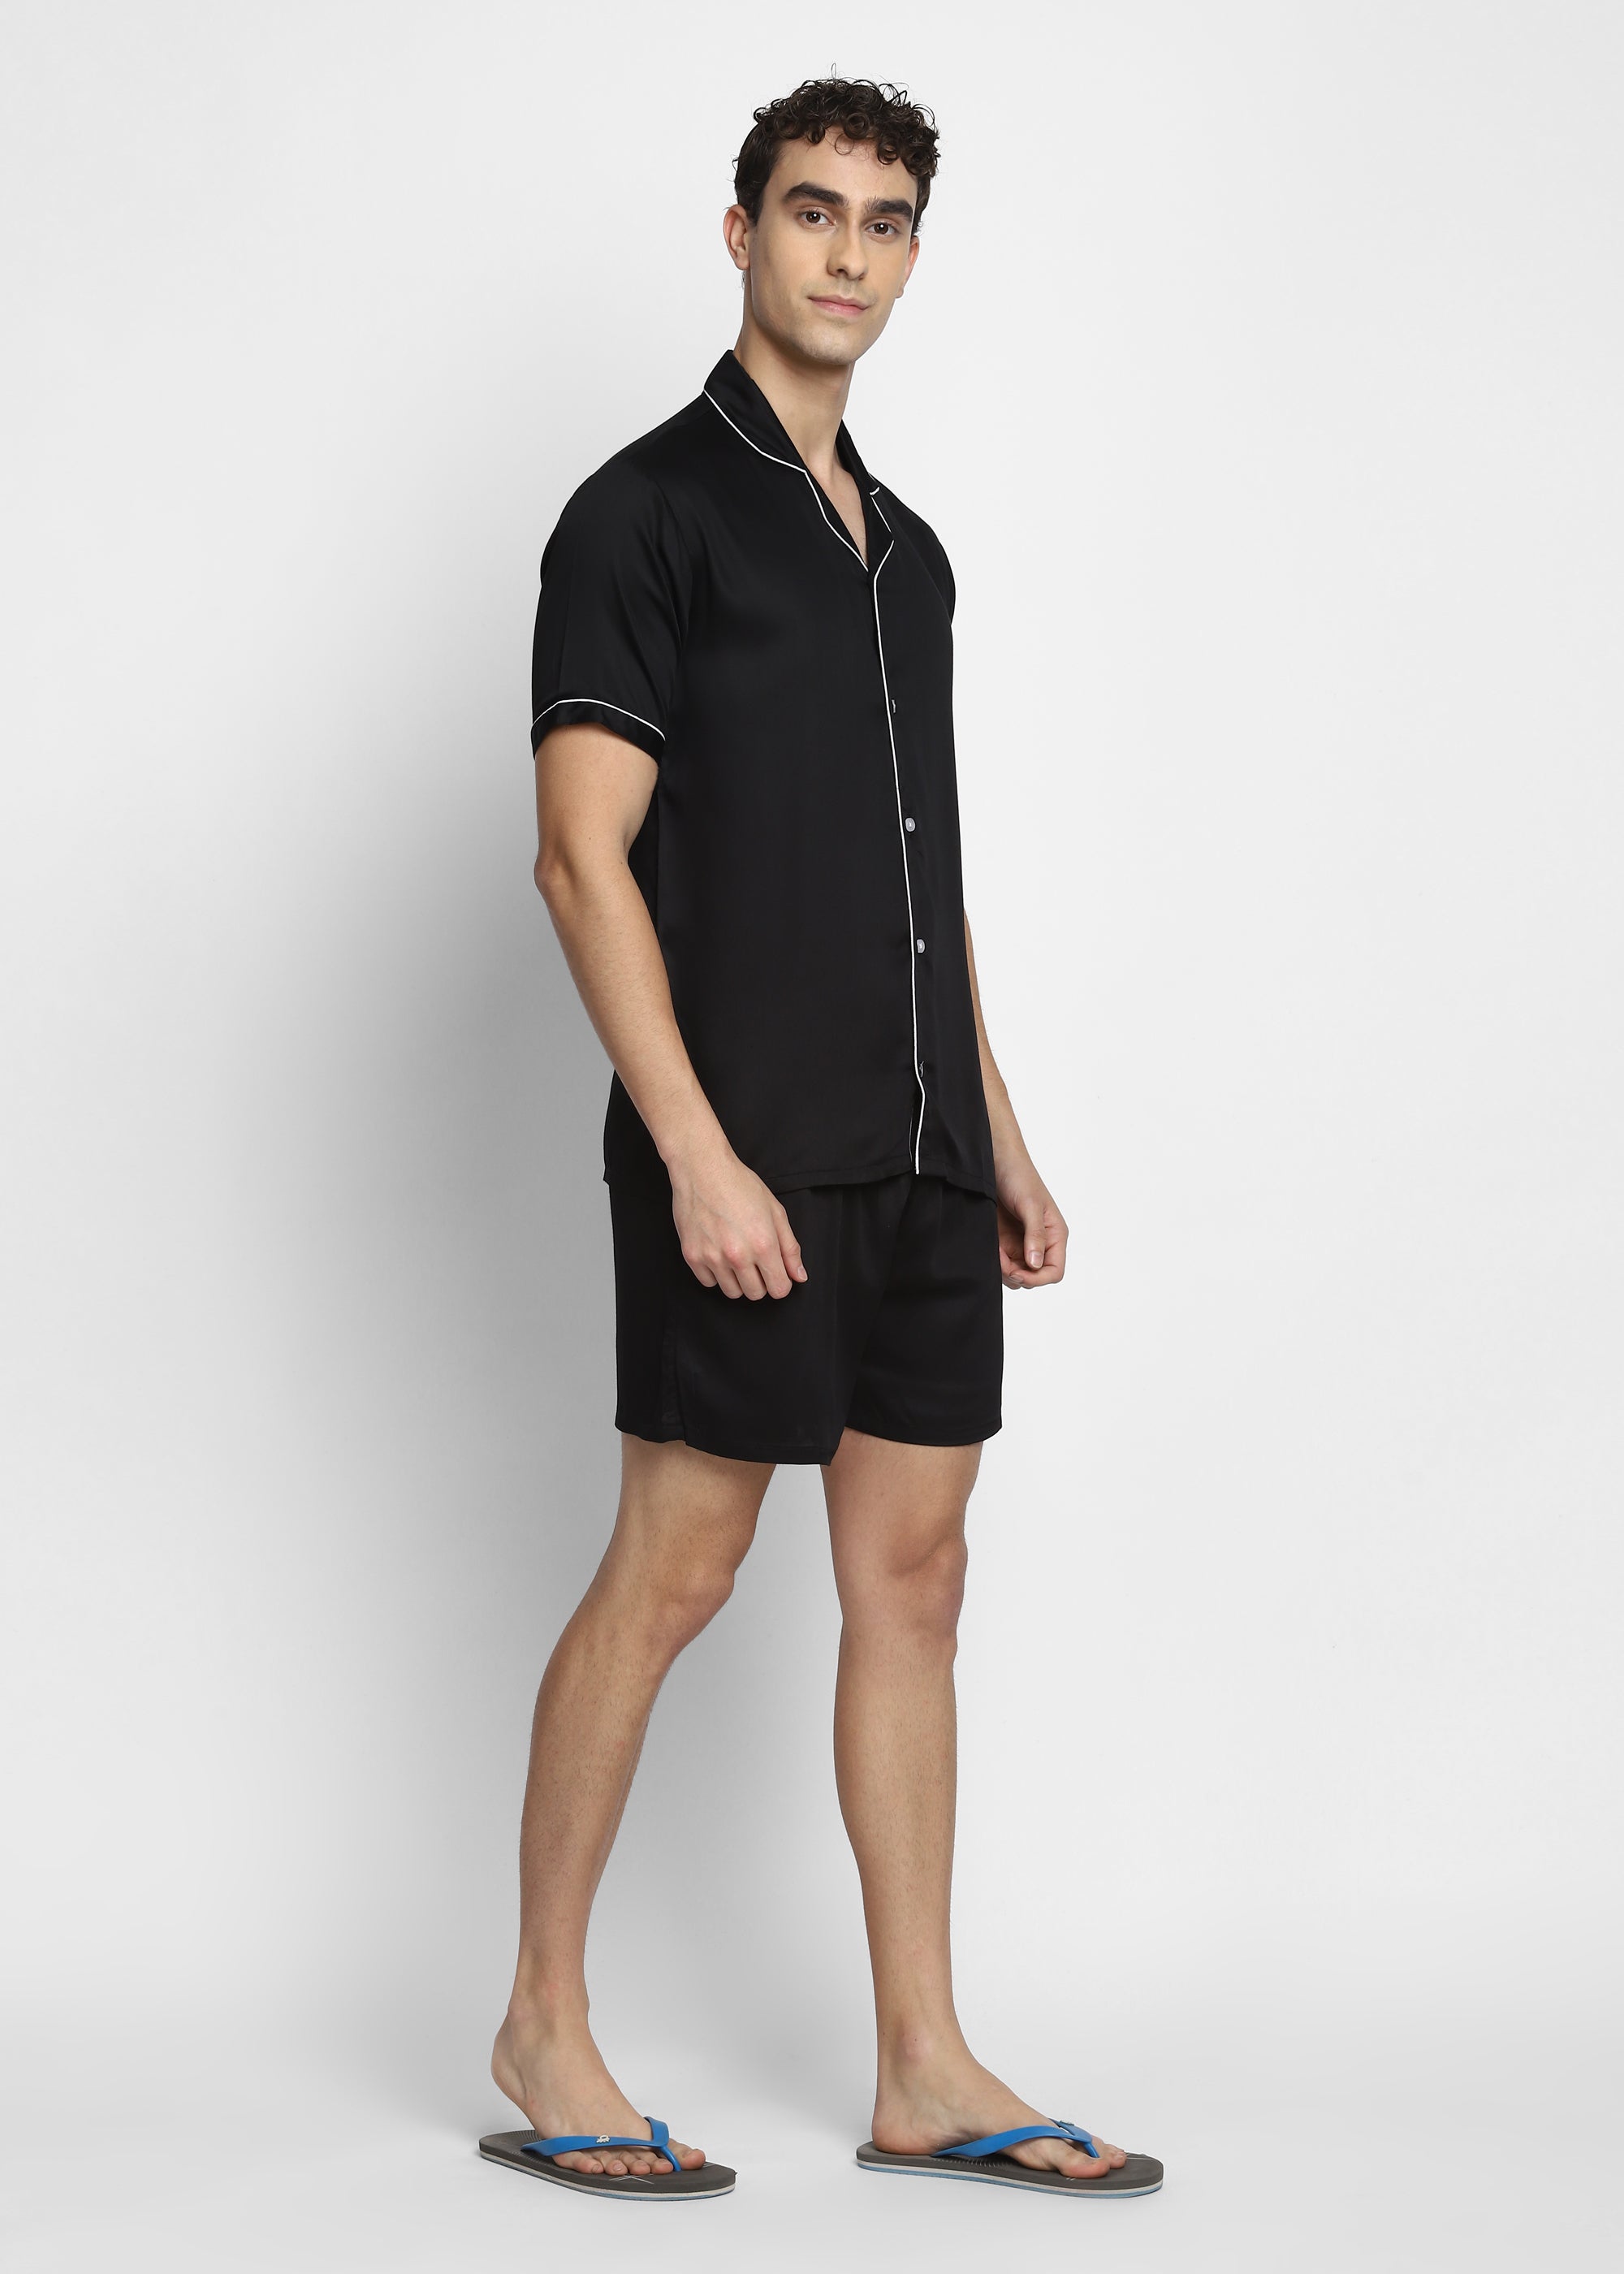 Ultra Soft Black Modal Satin Short Sleeve Men's Shorts Set - Shopbloom